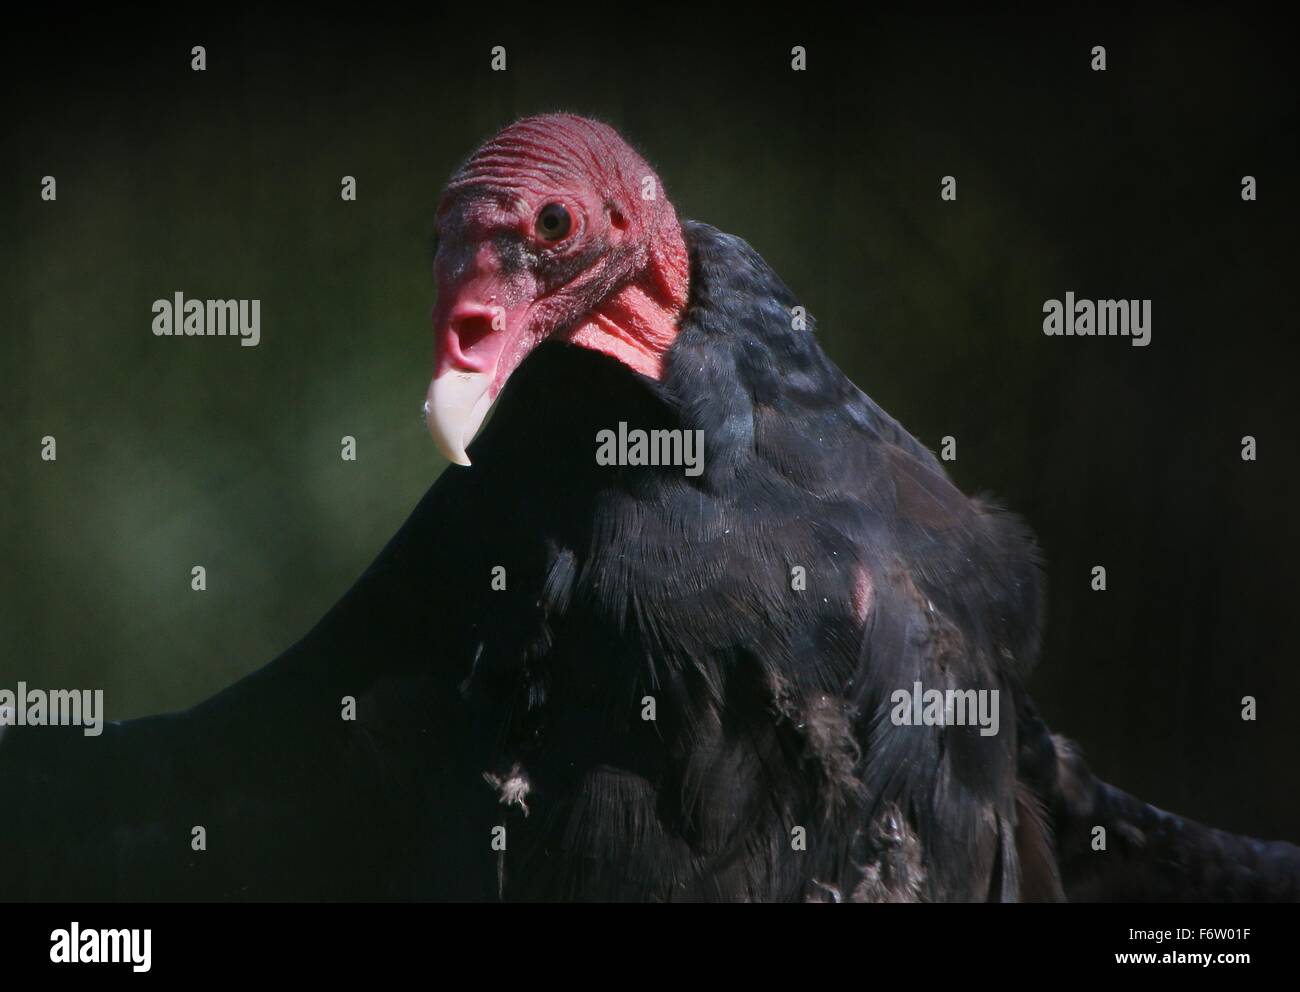 New World Turkey vulture or Turkey buzzard (Cathartes aura) Stock Photo